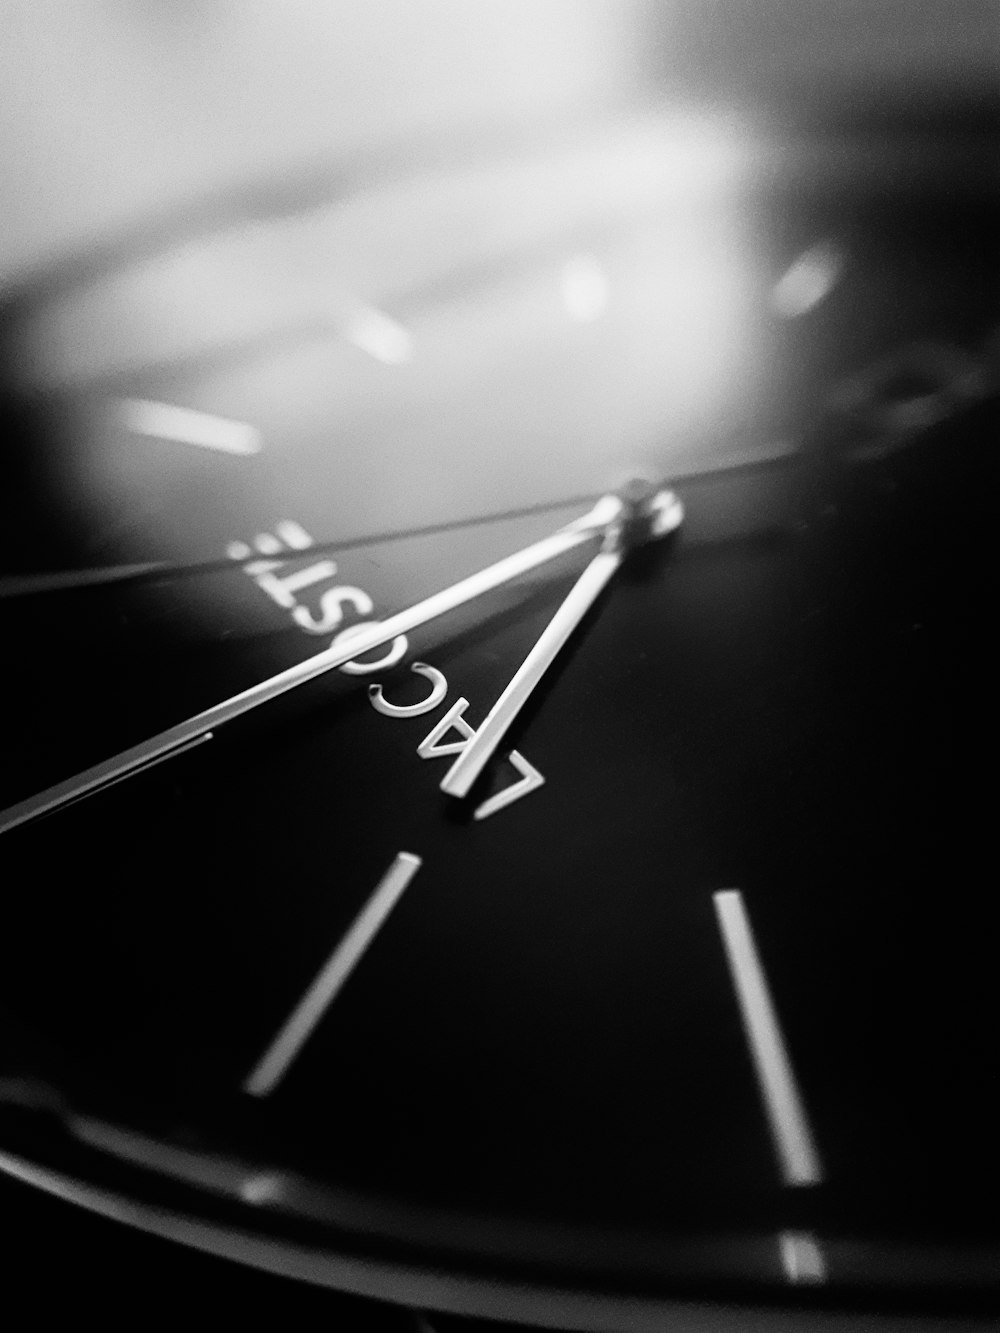 black and white analog watch